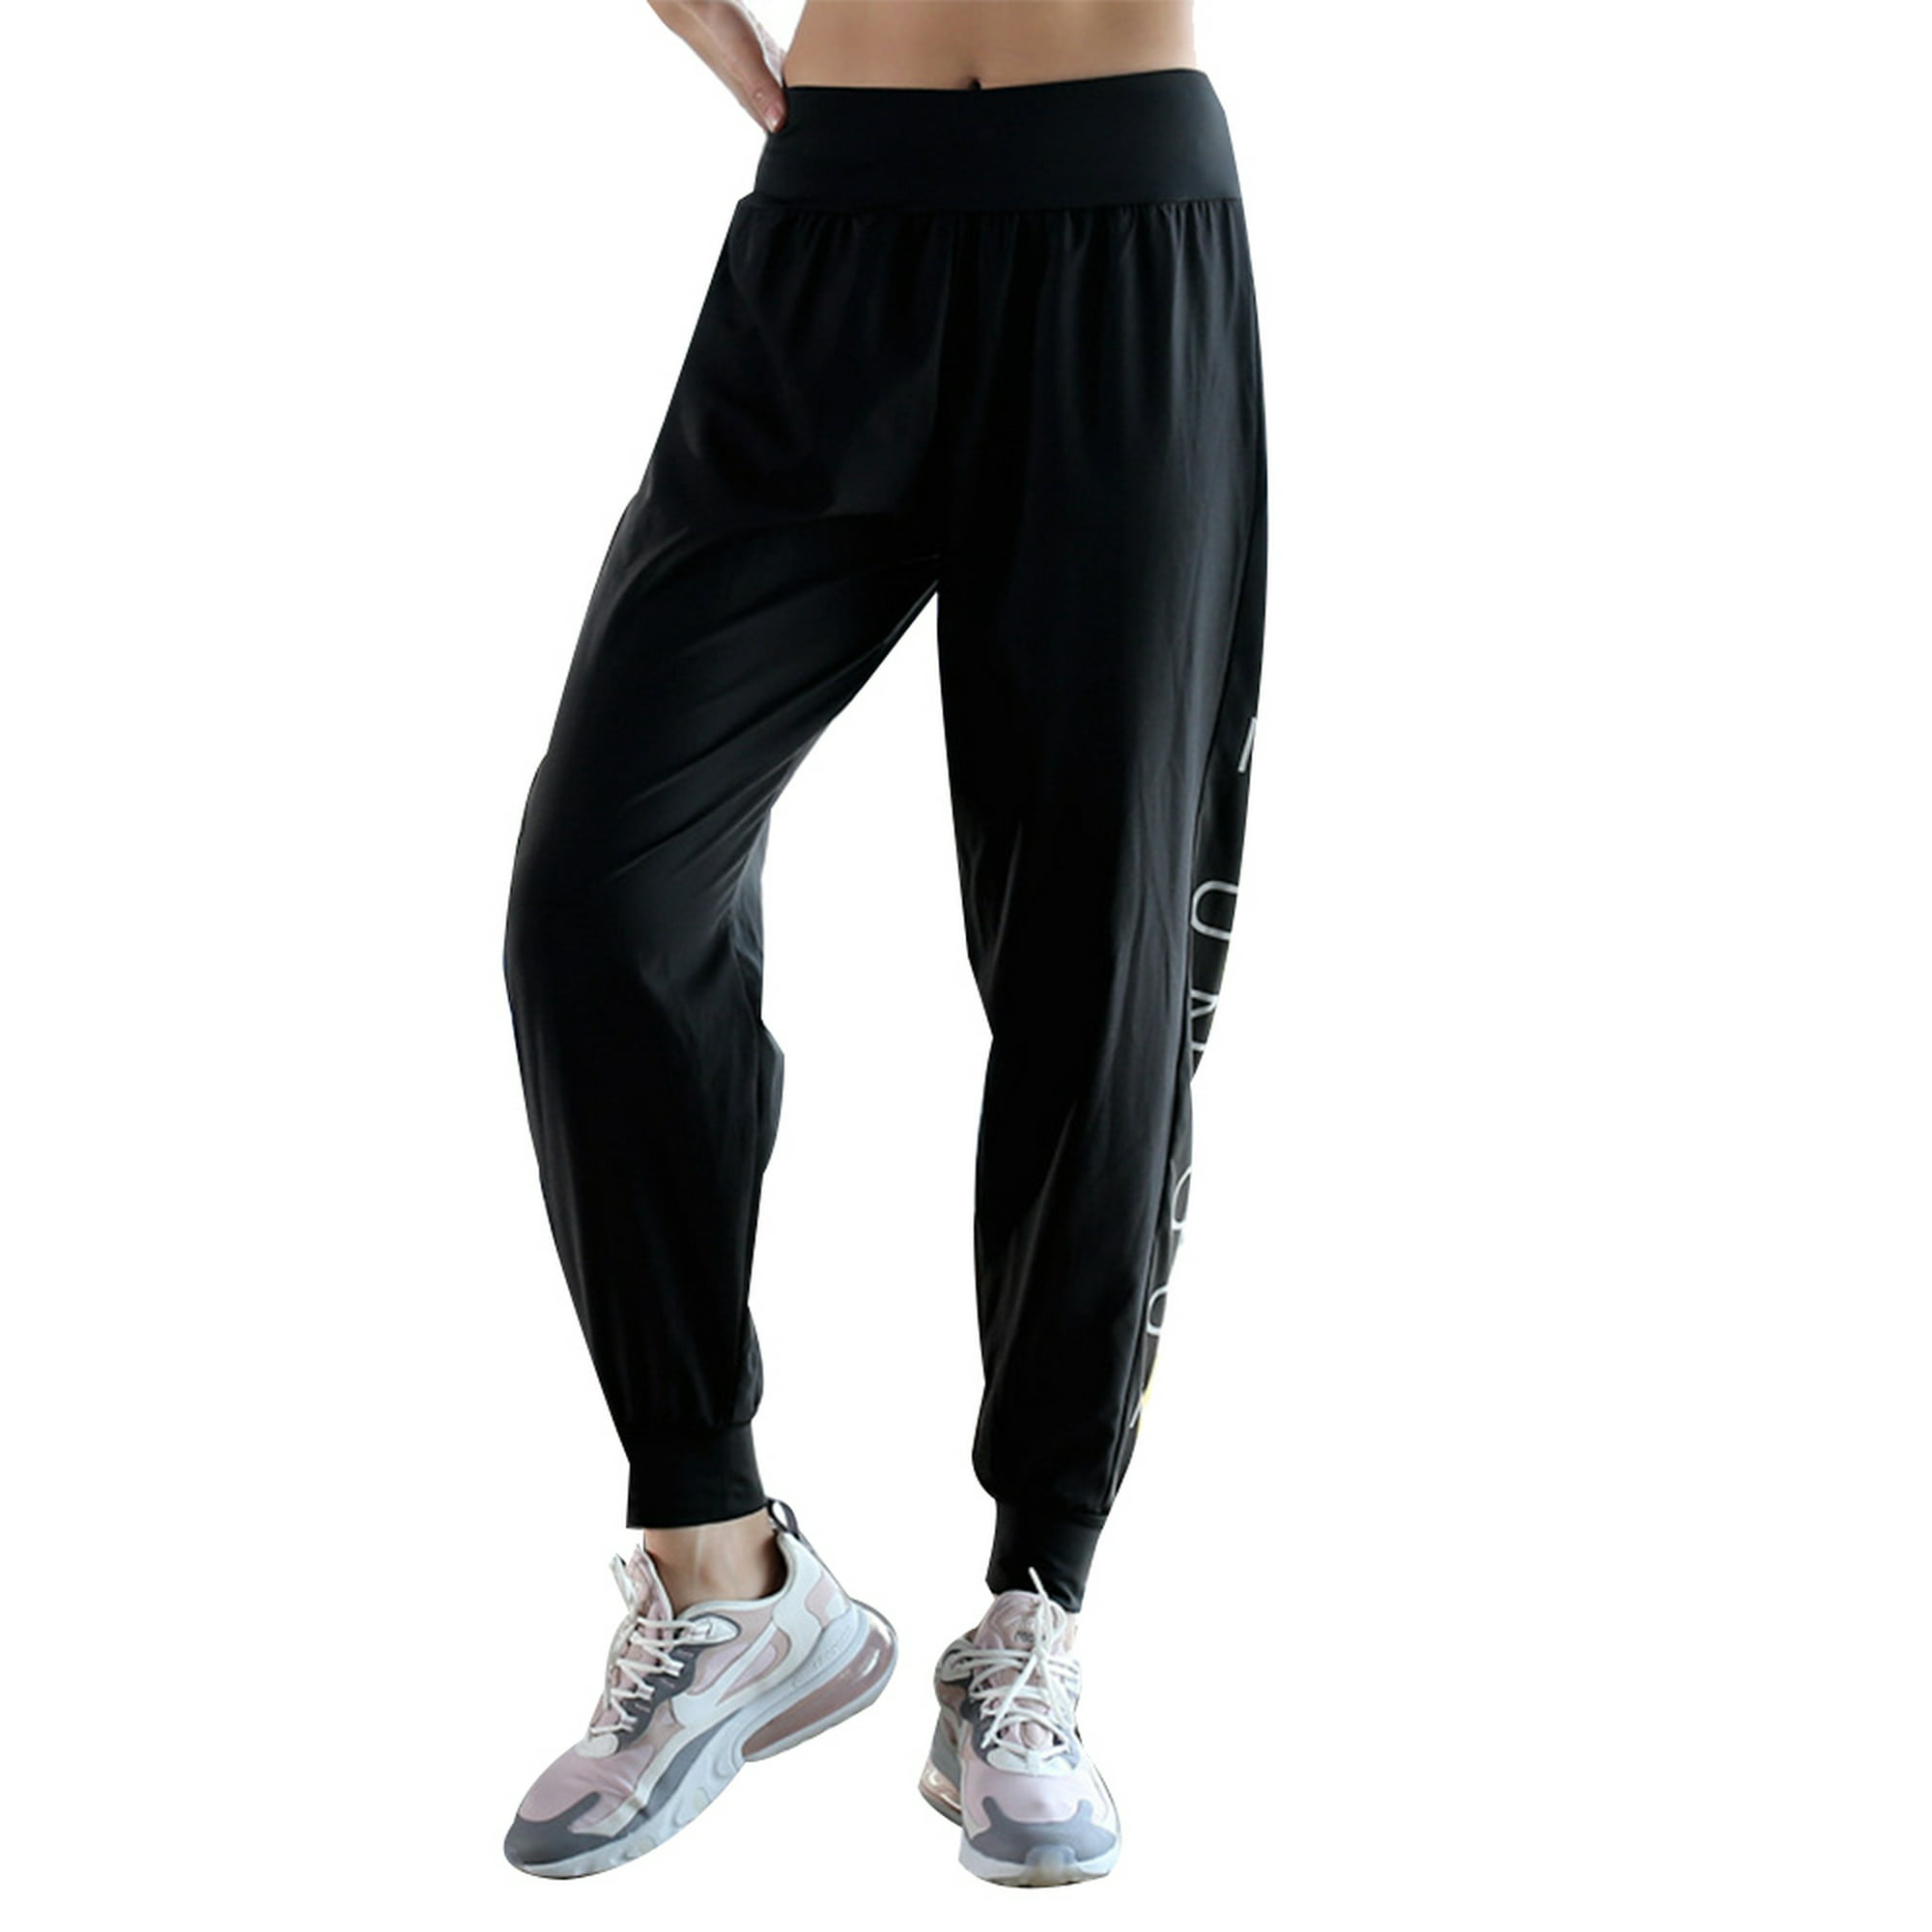 Pantalones deportivos tipo jogger con bolsillos, para mujer, ajuste  atlético para gimnasio o para descanso